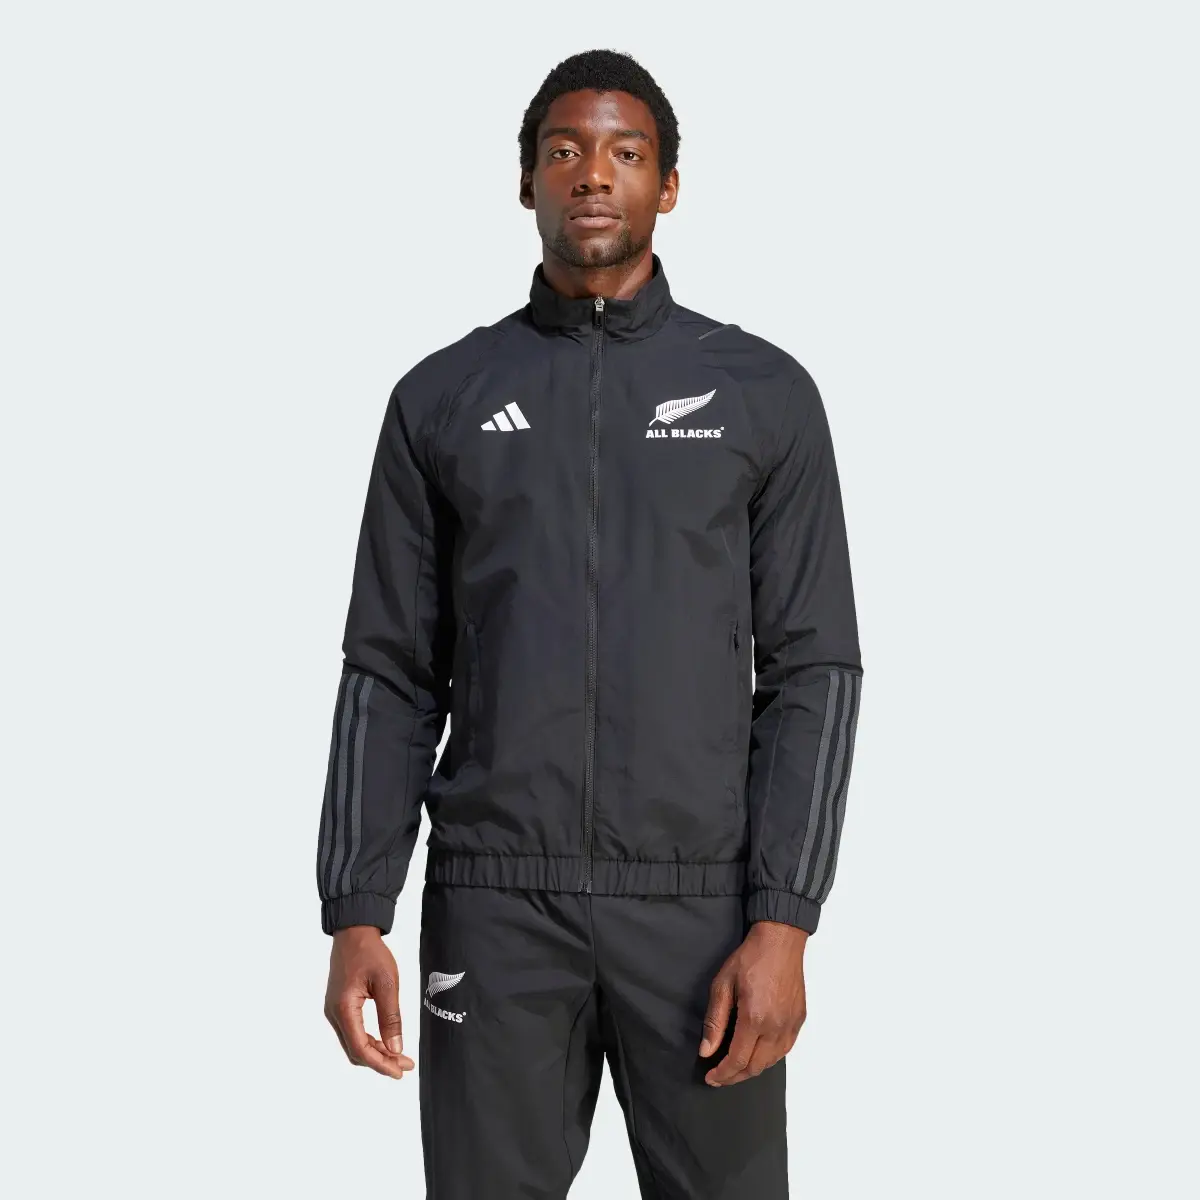 Adidas All Blacks Rugby Track Suit Jacket. 2